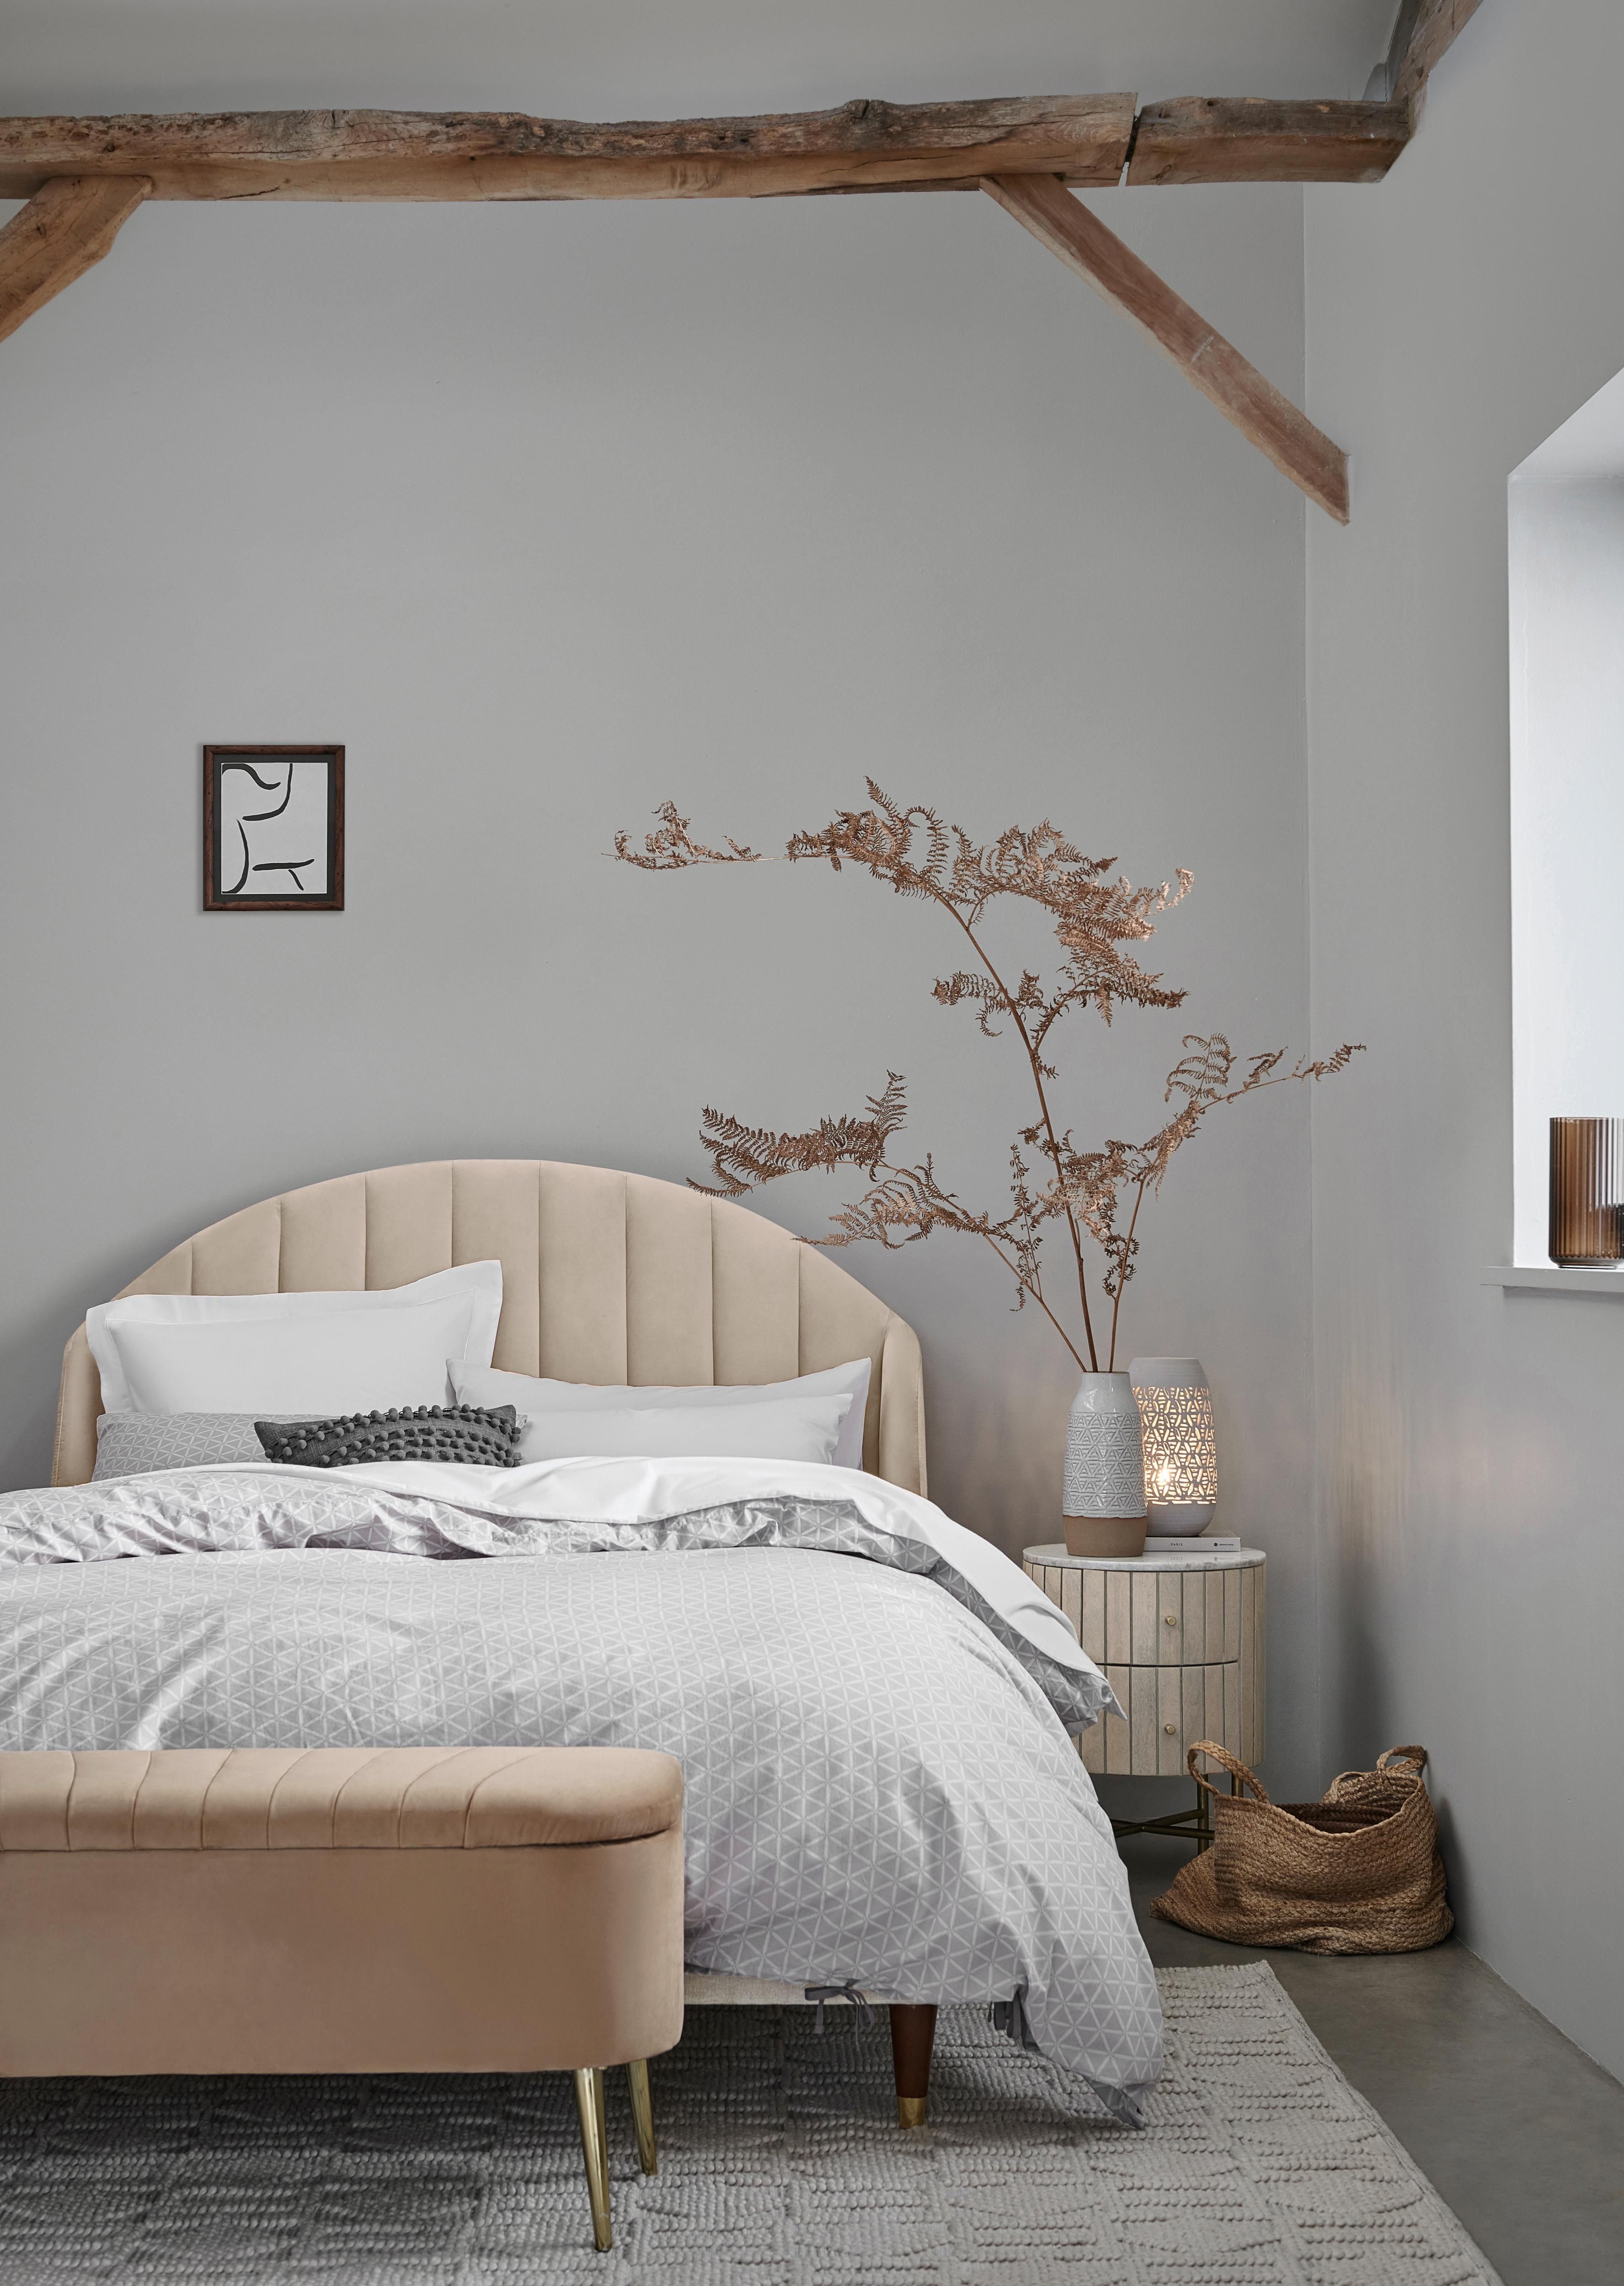 5 Bedroom Decor Trends to Embrace — Bedroom Ideas